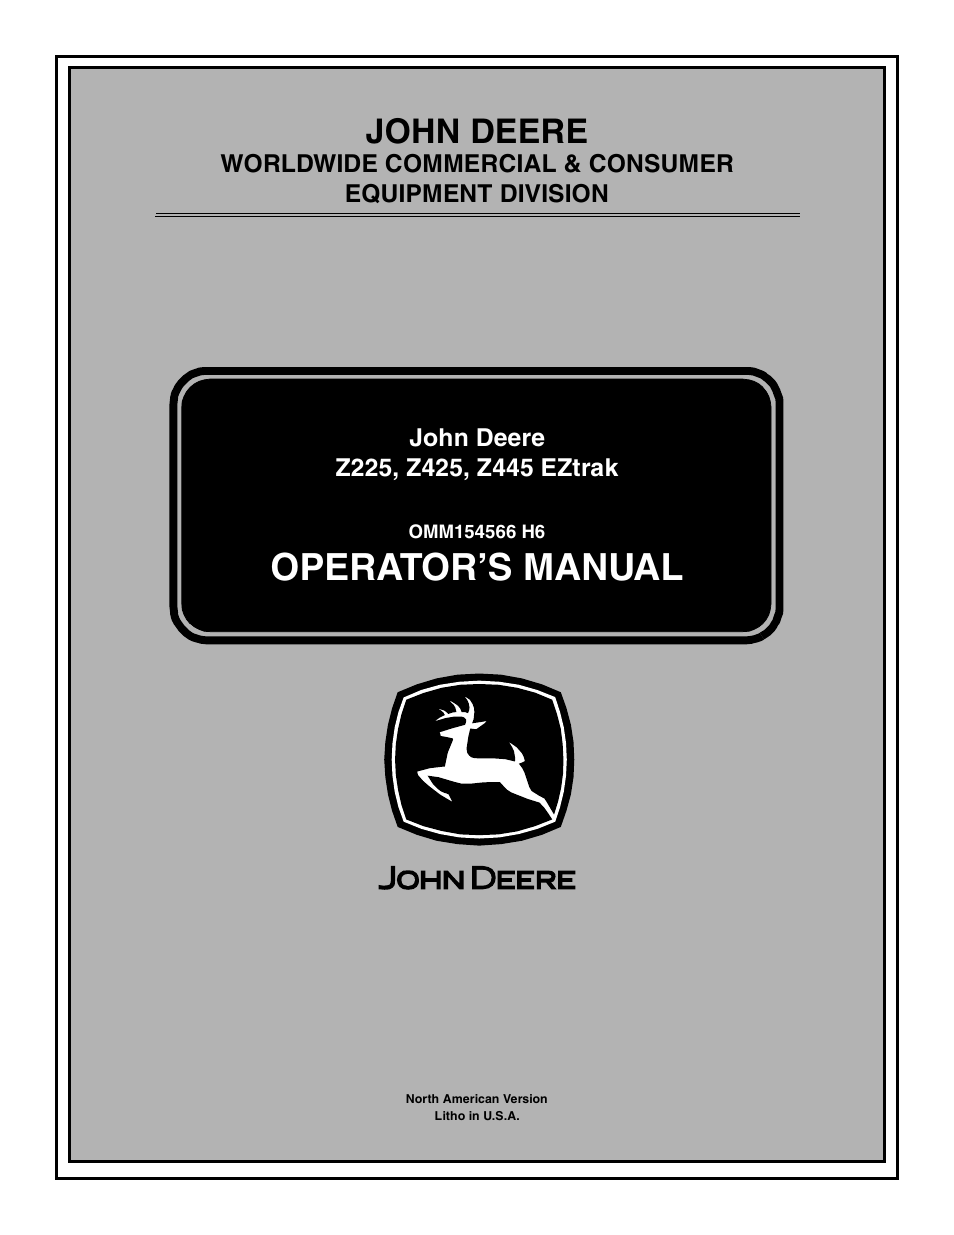 JOHN DEERE Z225 MANUAL PDF